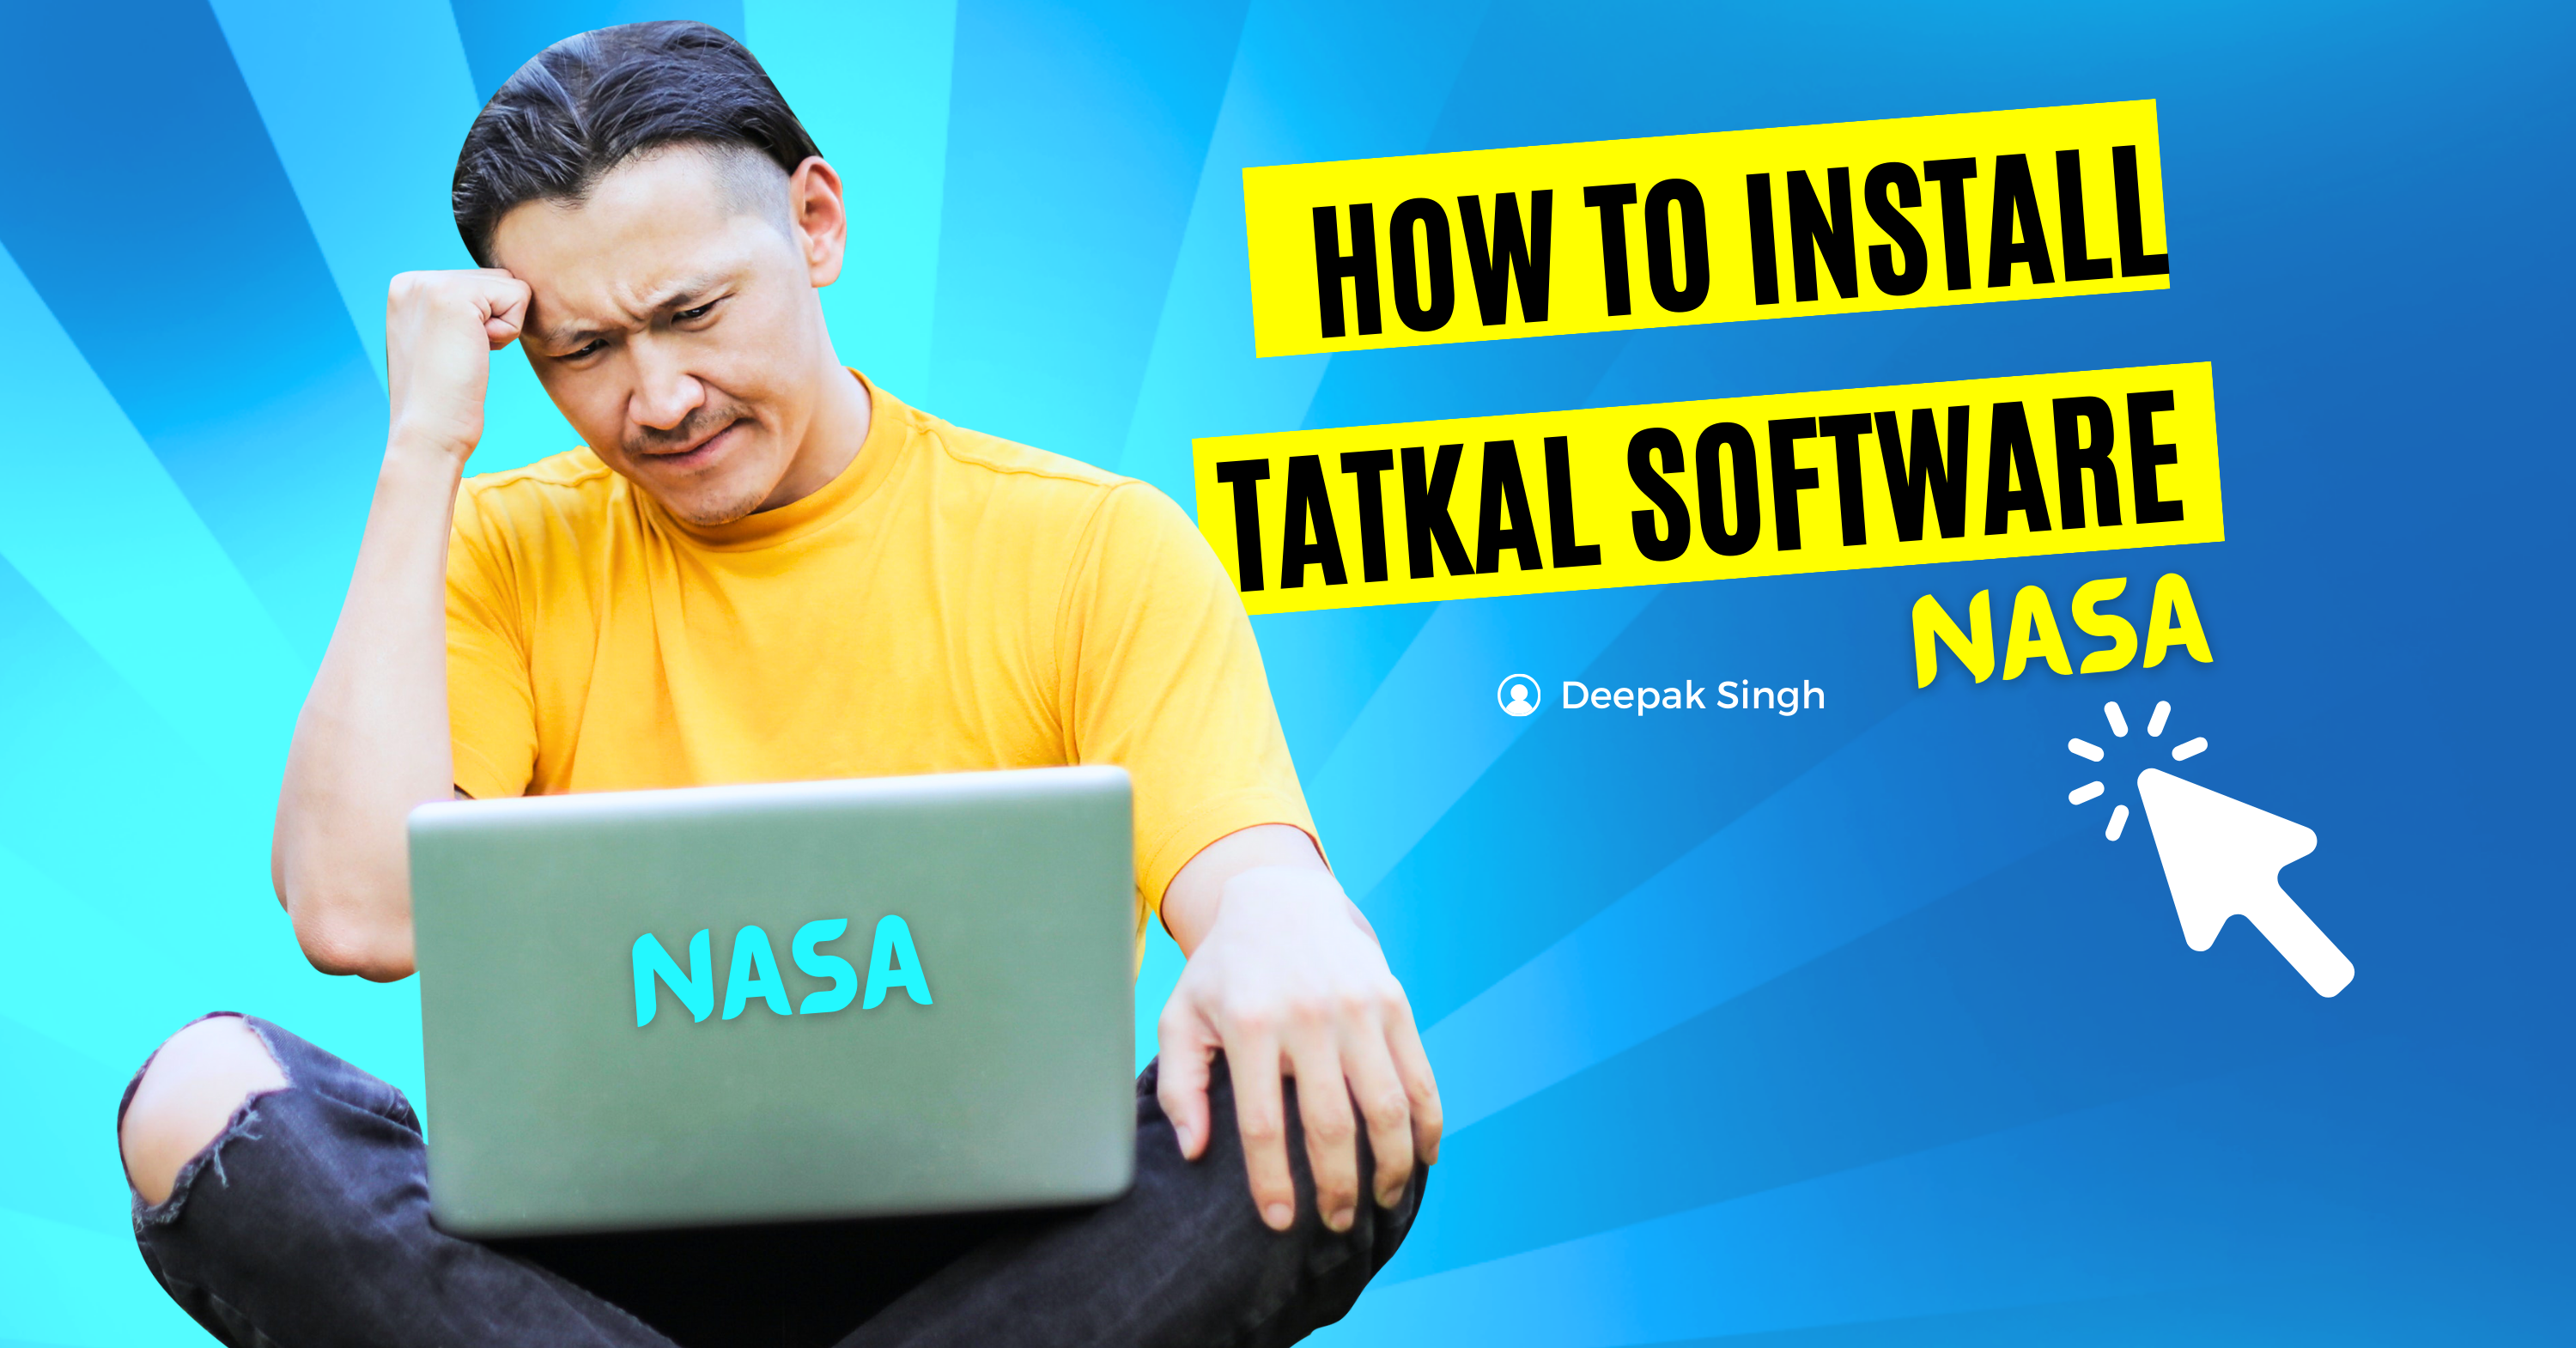 Tatkal Software